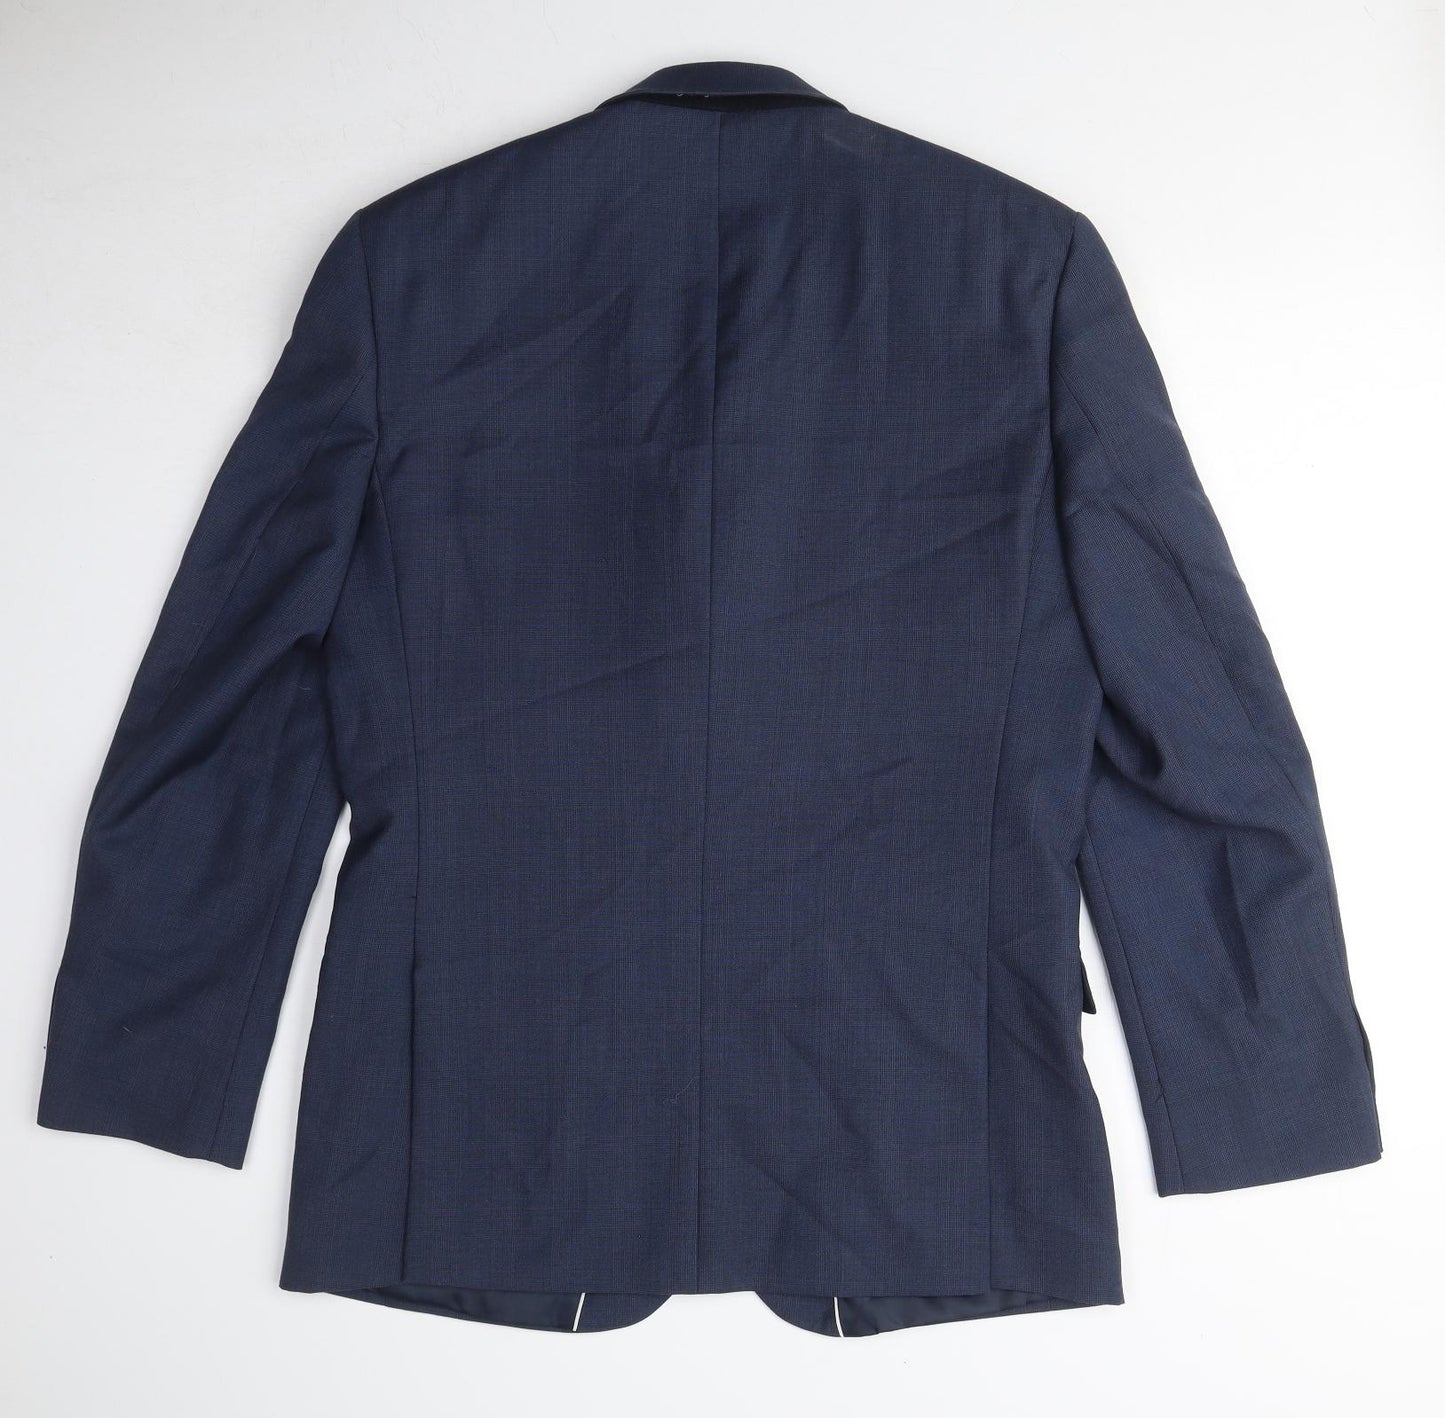 Racing Green Mens Blue Check Wool Jacket Suit Jacket Size 40 Regular